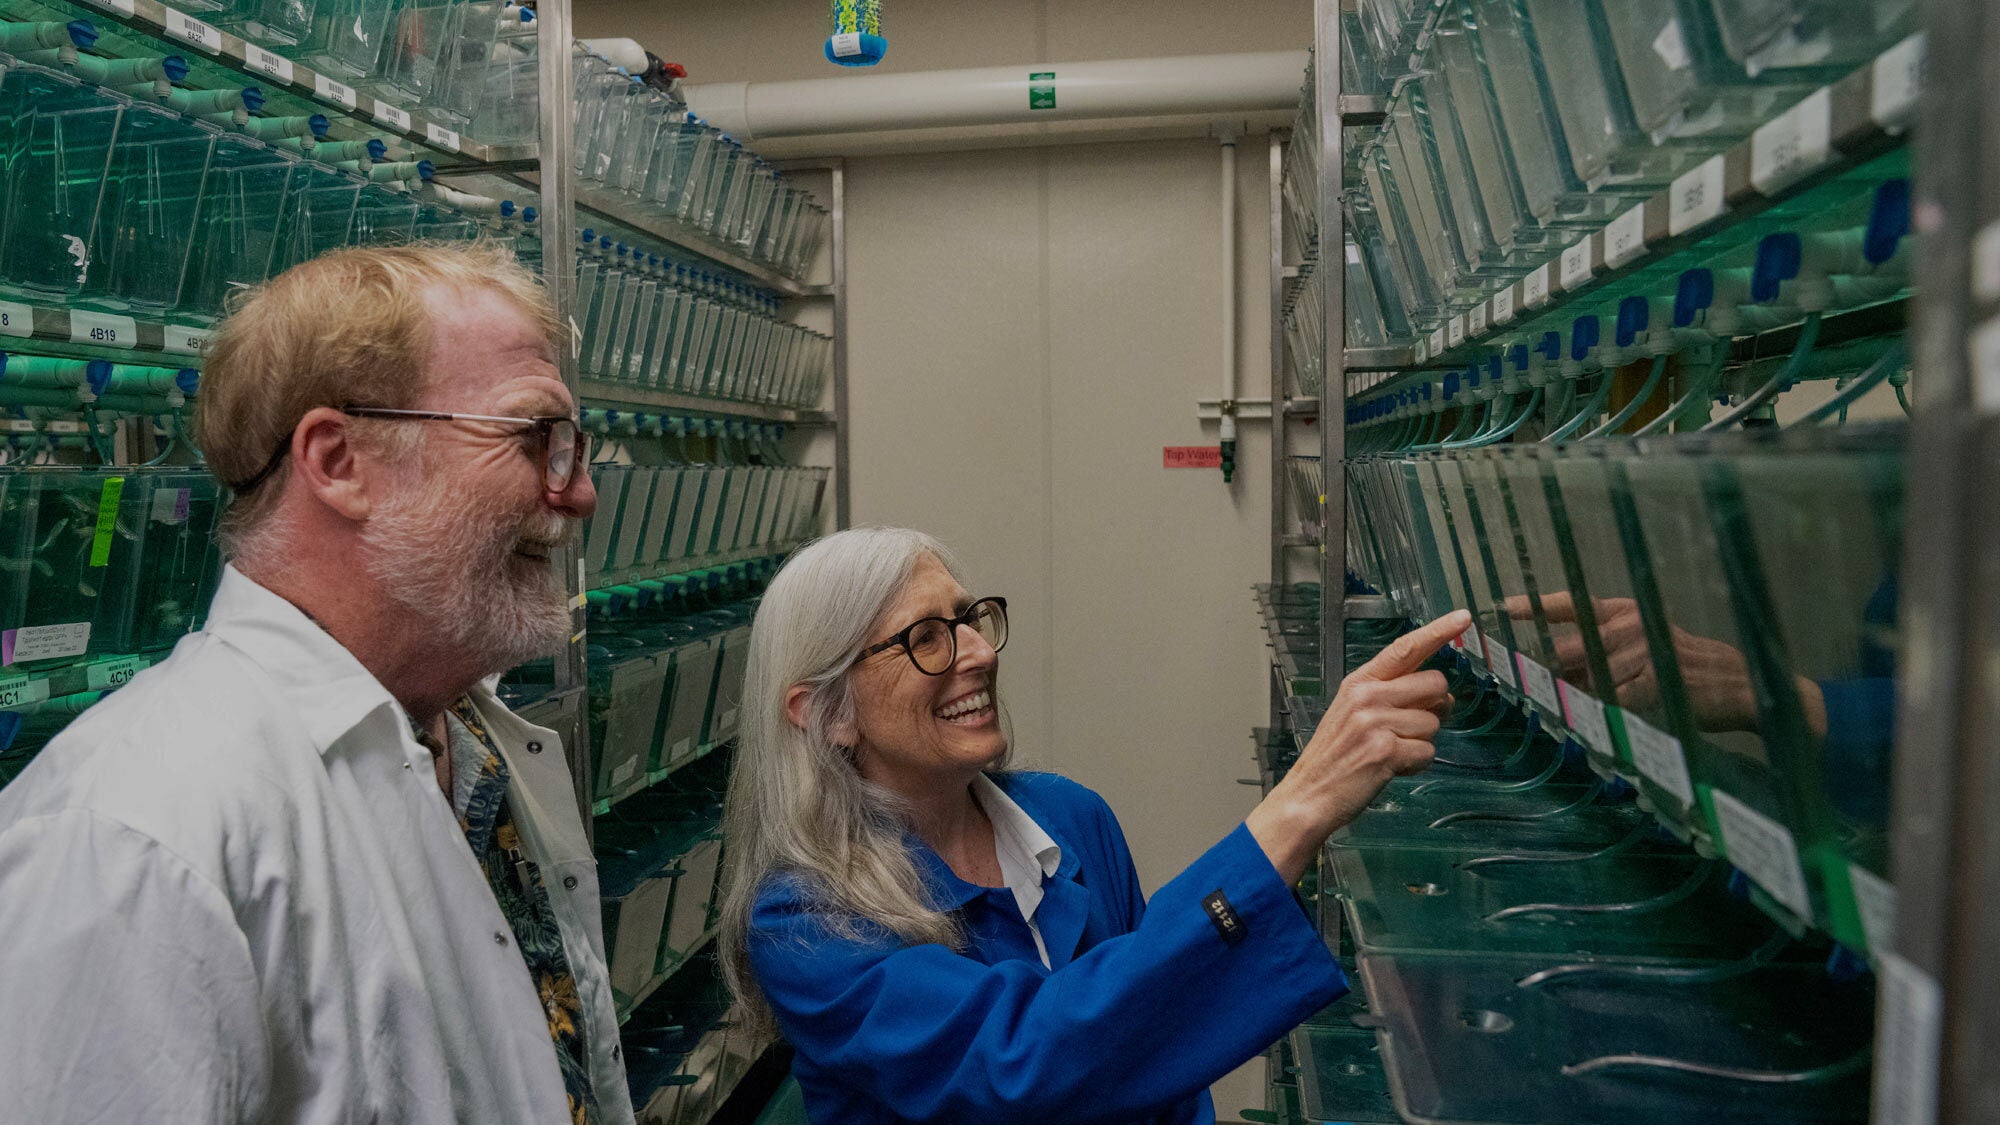 UC Davis College of Biological Sciences faculty exploring the zebrafish facility to advance genetics research. (Sasha Bakhter/UC Davis)